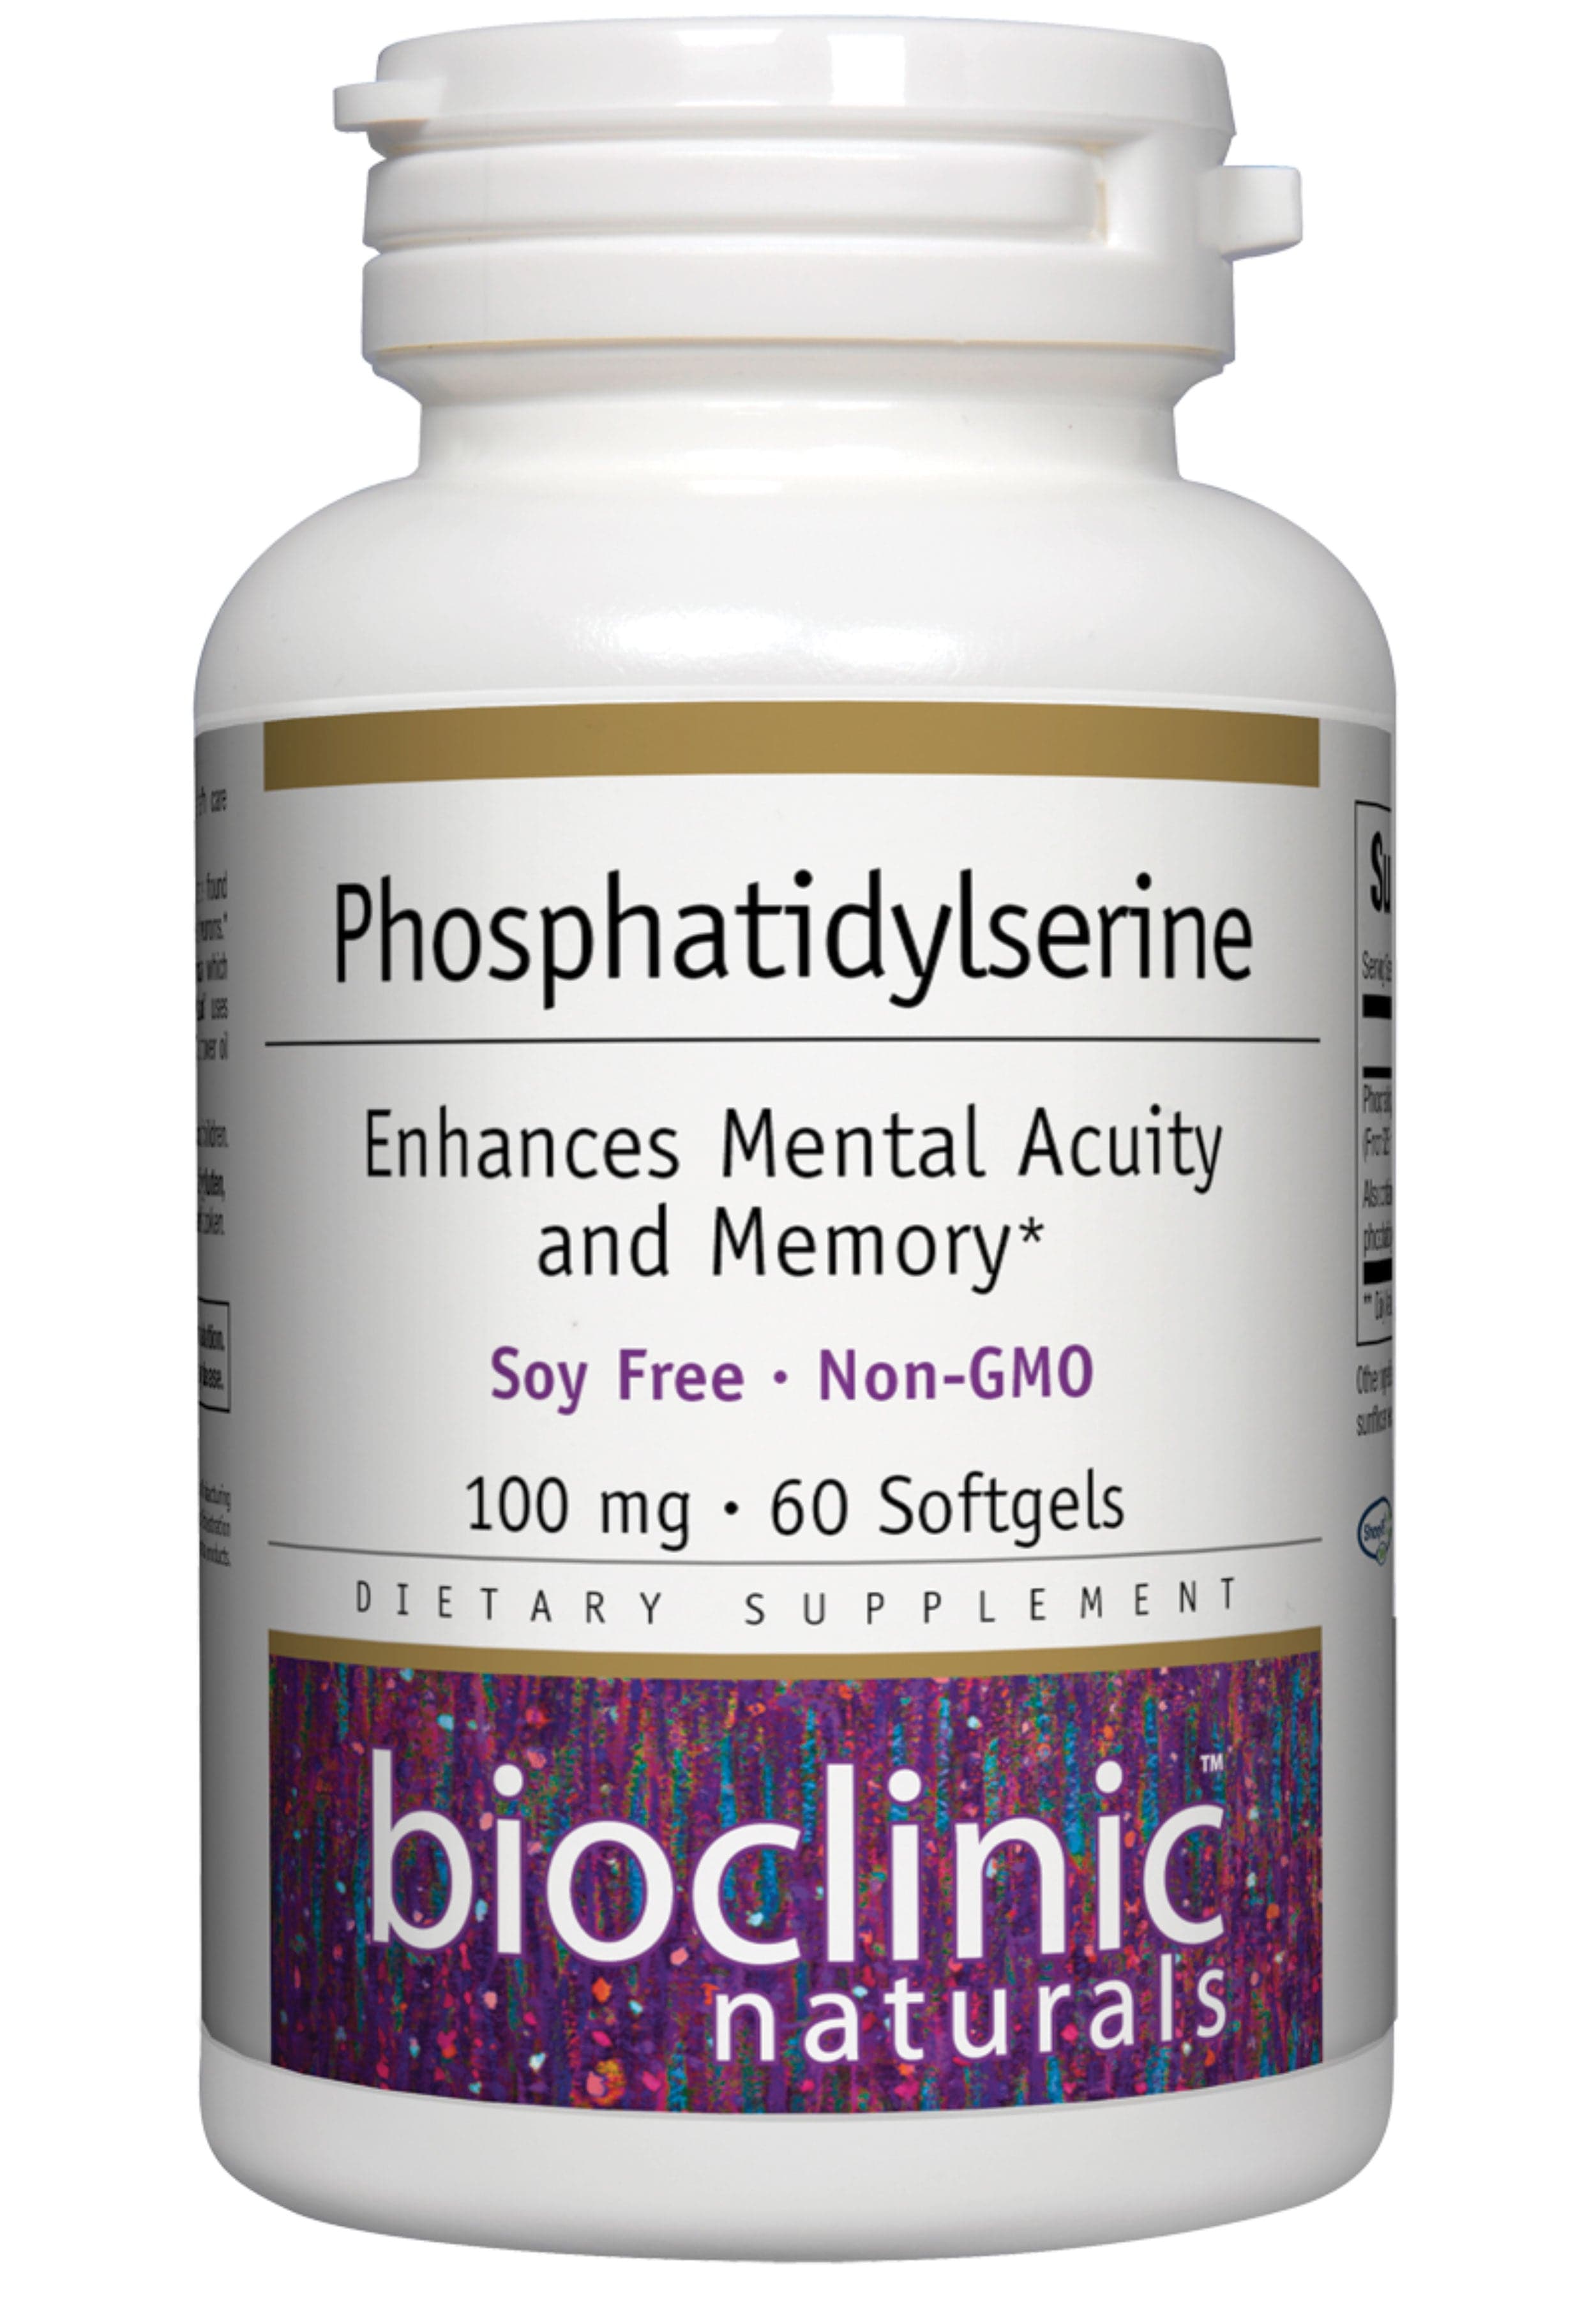 Bioclinic Naturals Phosphatidylserine